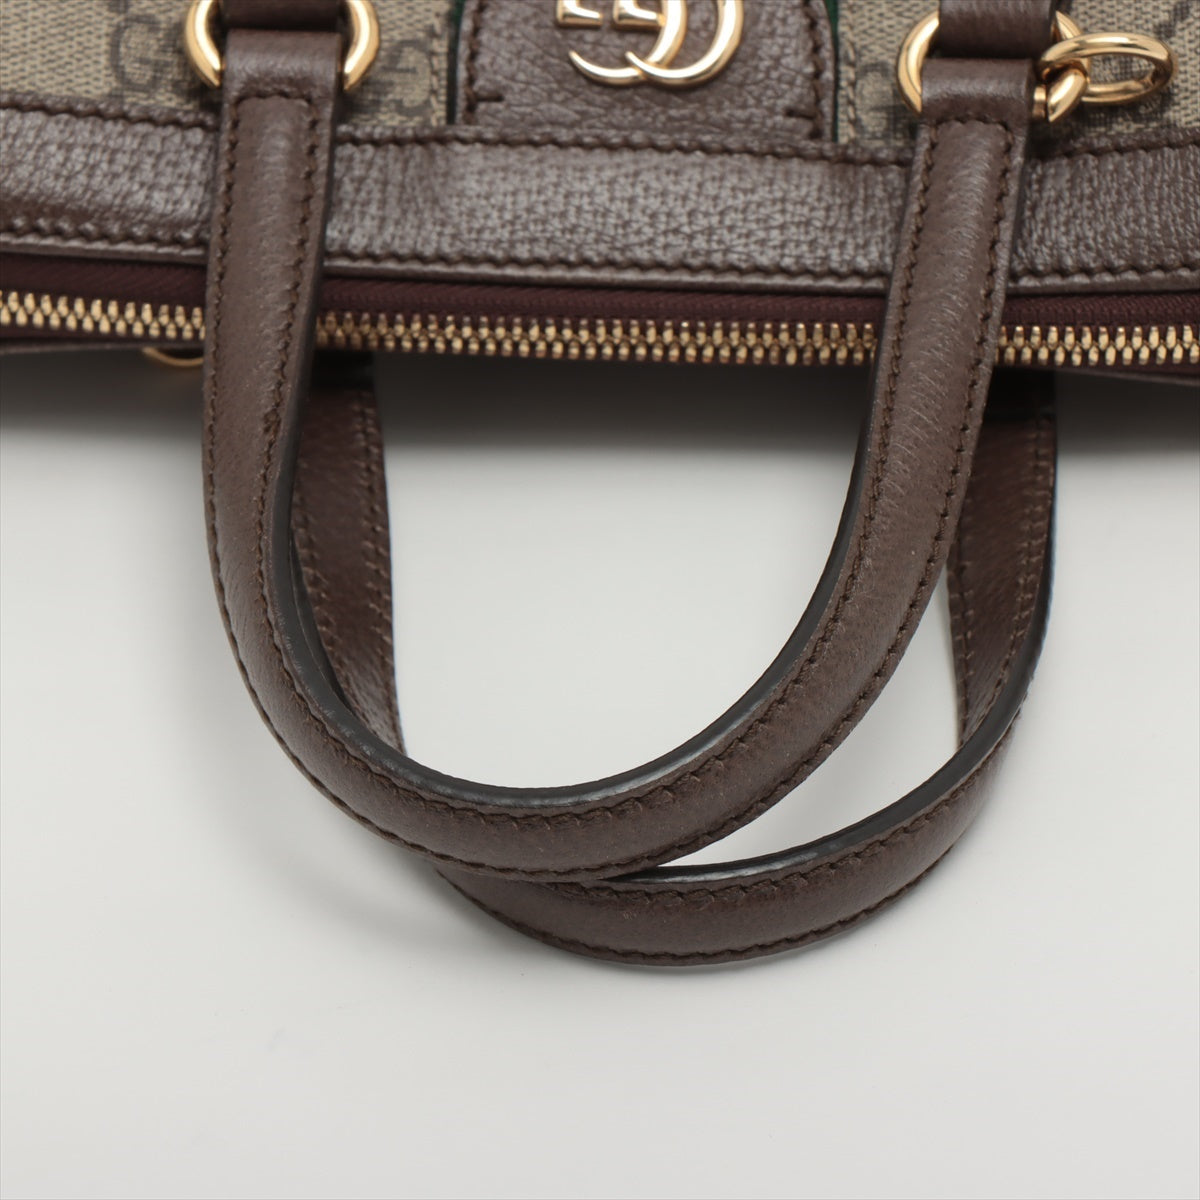 Gucci GG Supreme Ophidia PVC & leather 2way handbag Beige×Brown 547551